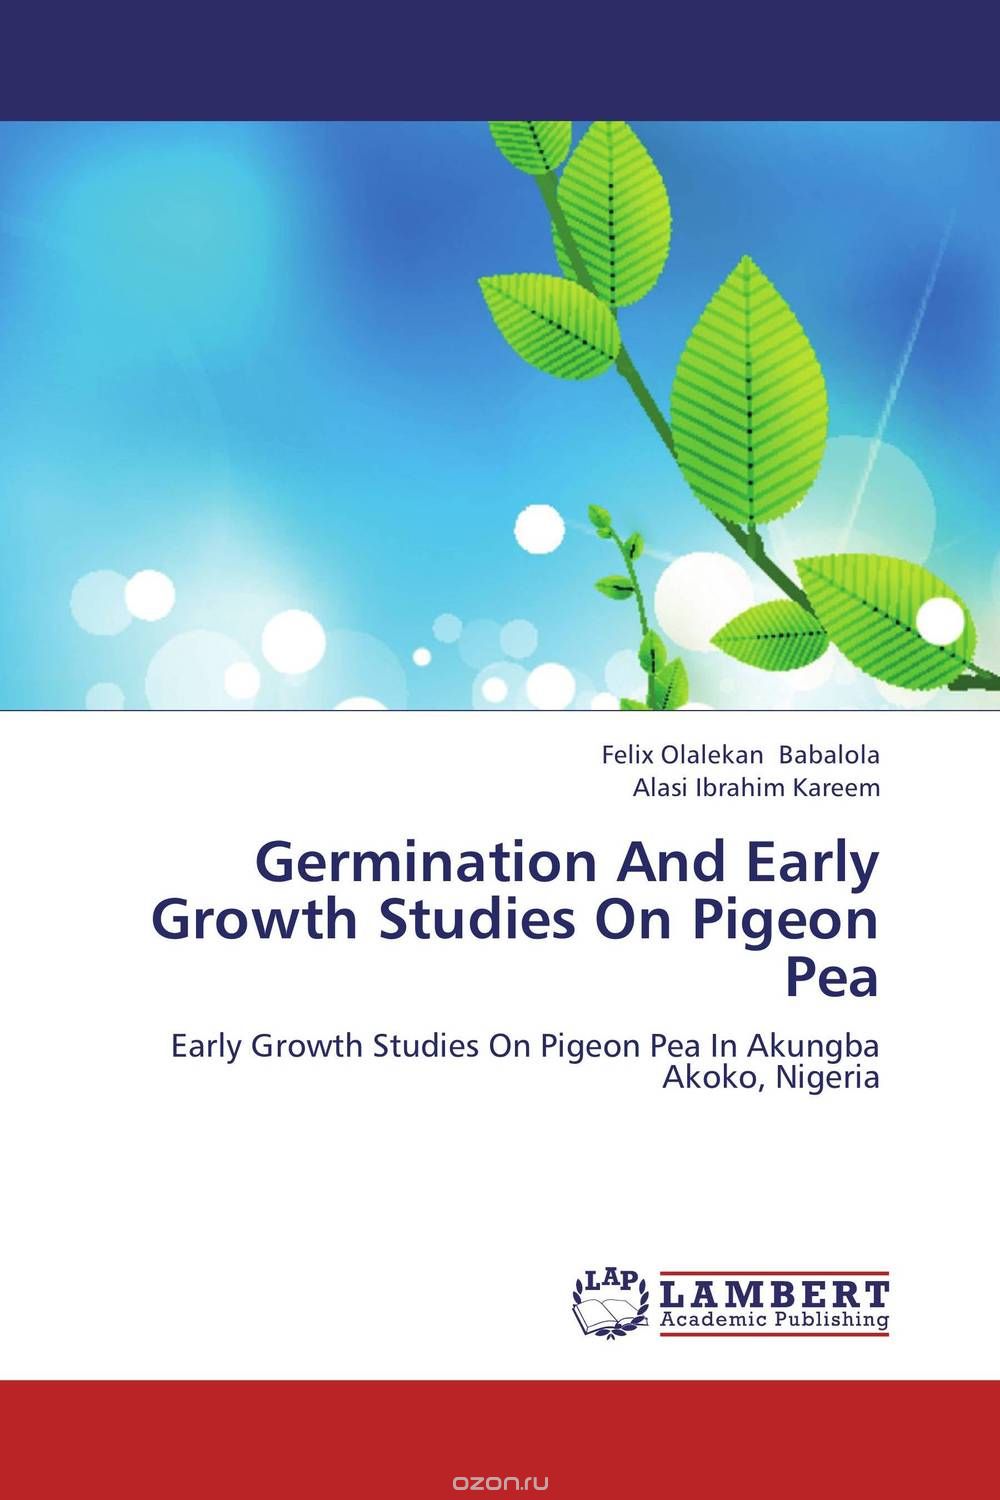 Скачать книгу "Germination And Early Growth Studies On Pigeon Pea"